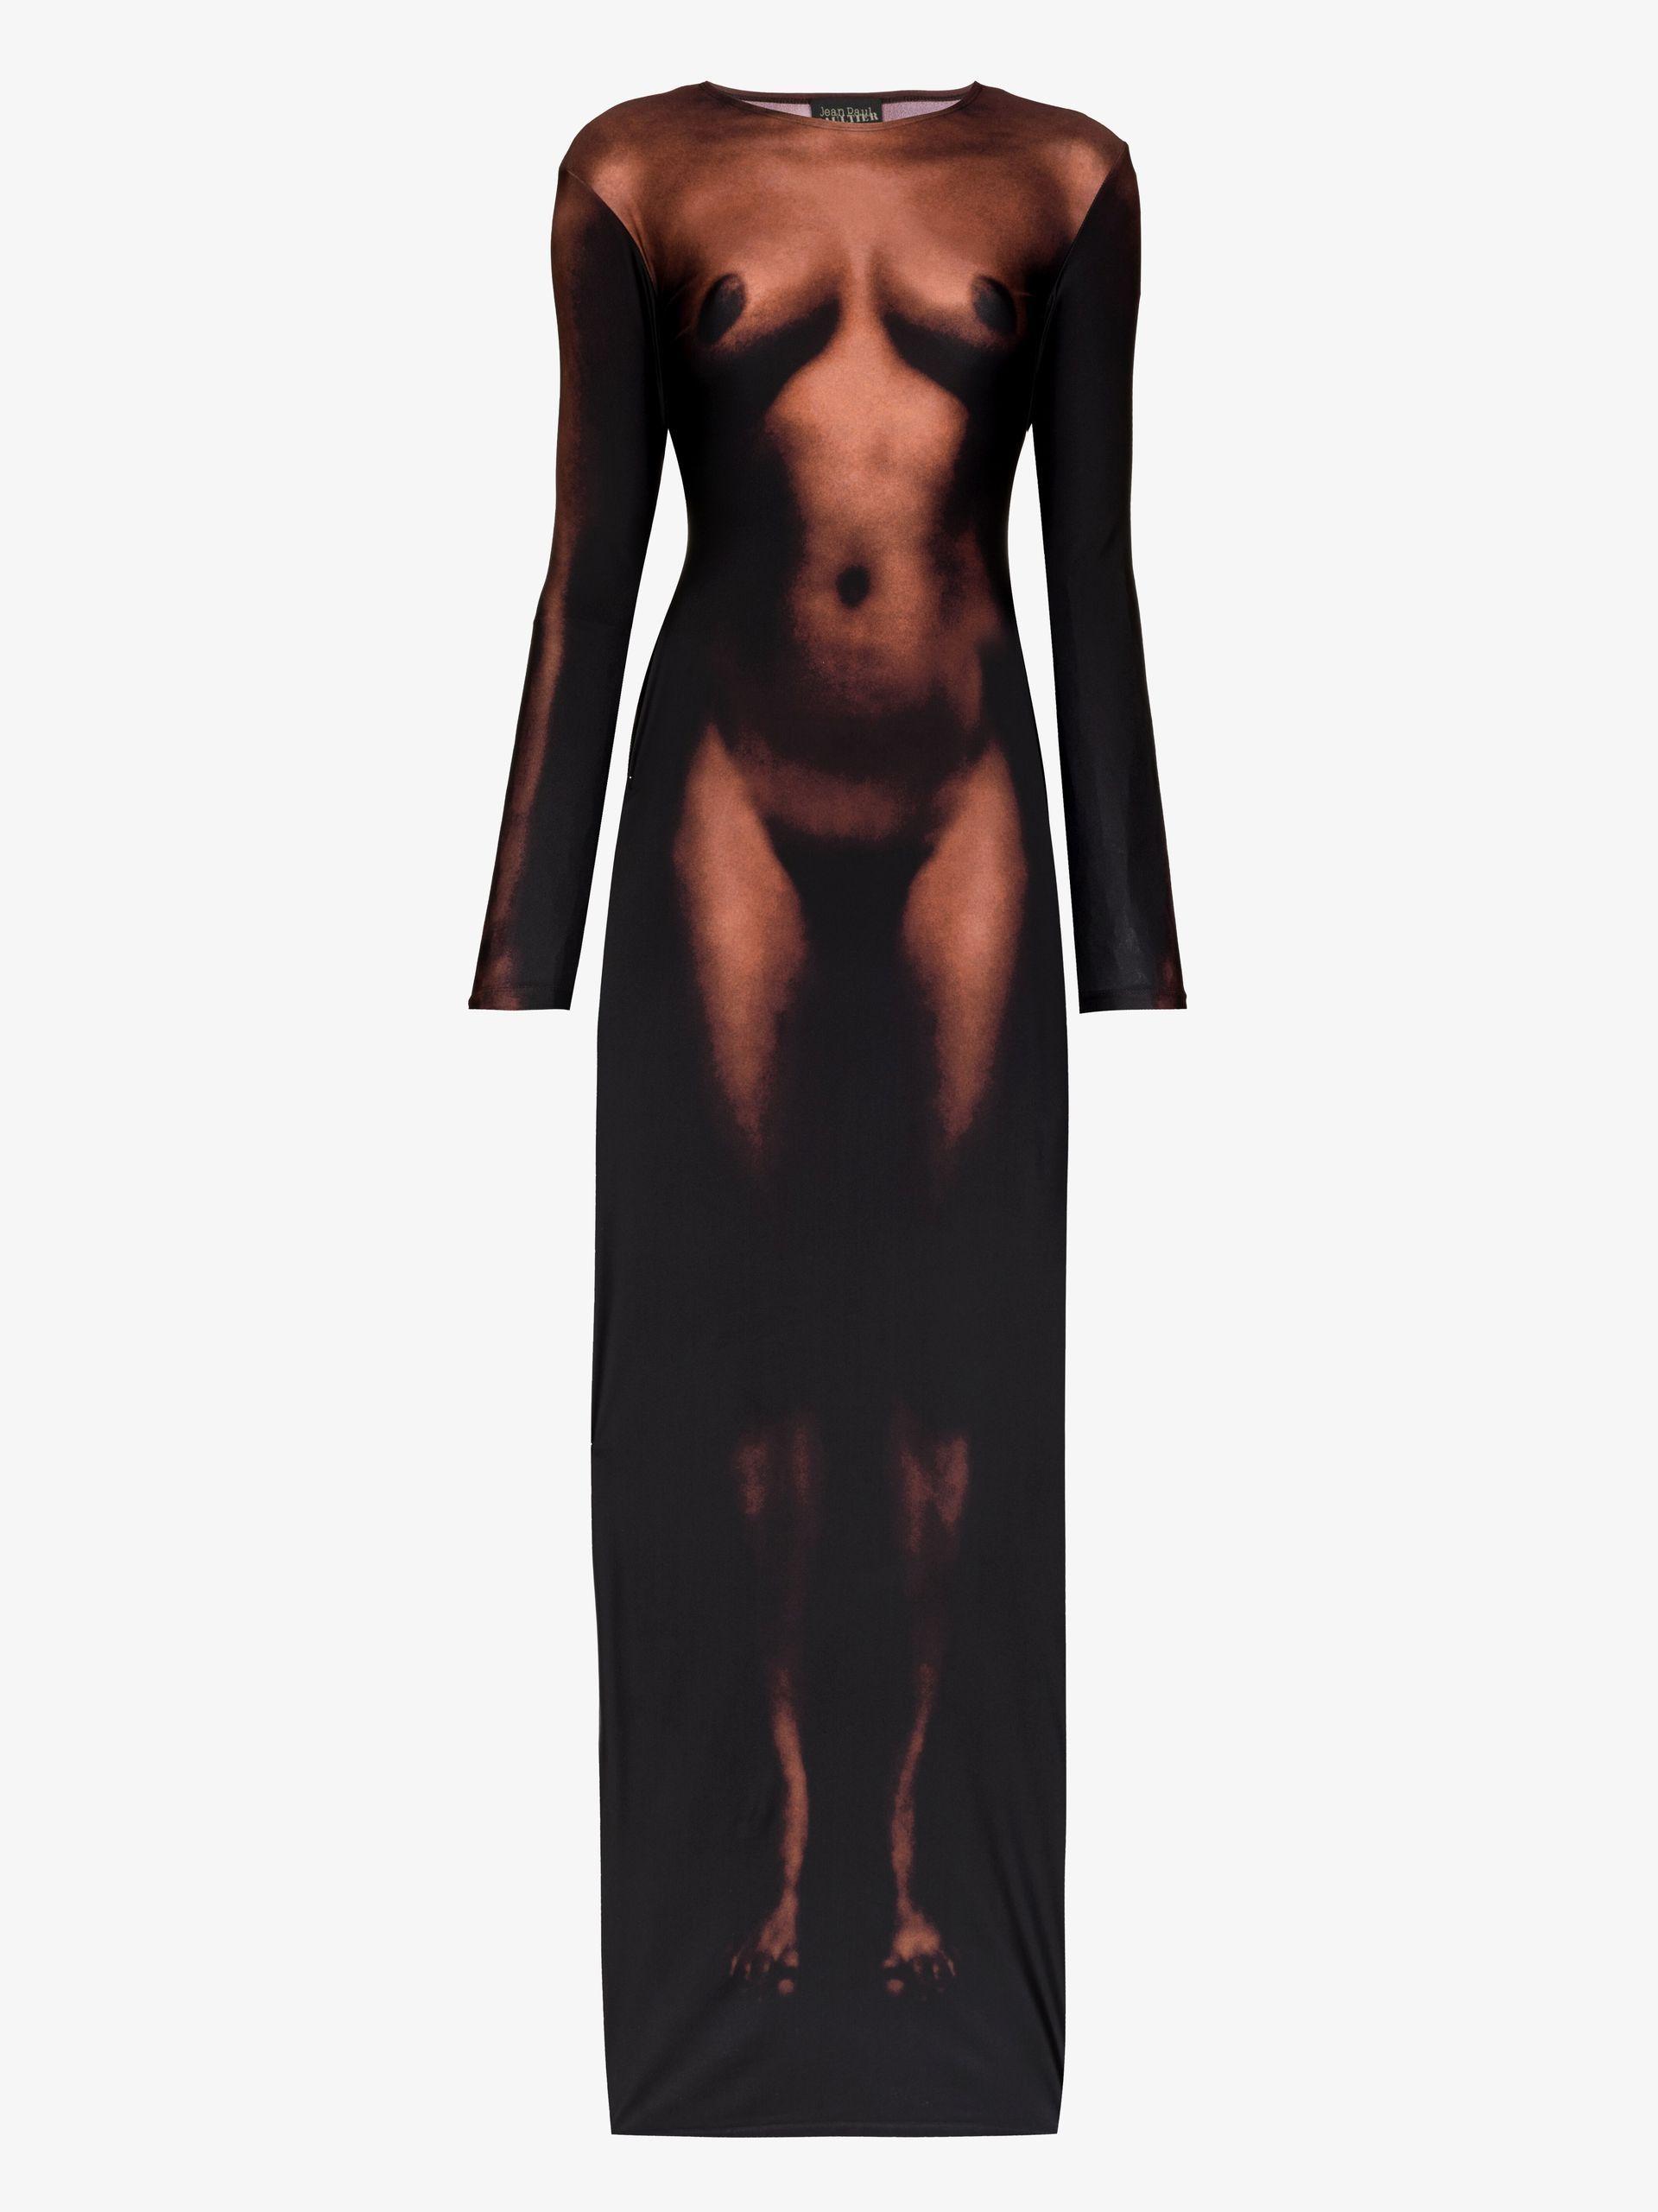 Jean Paul Gaultier X Lotta Volkova Naked Maxi Dress in Black | Lyst